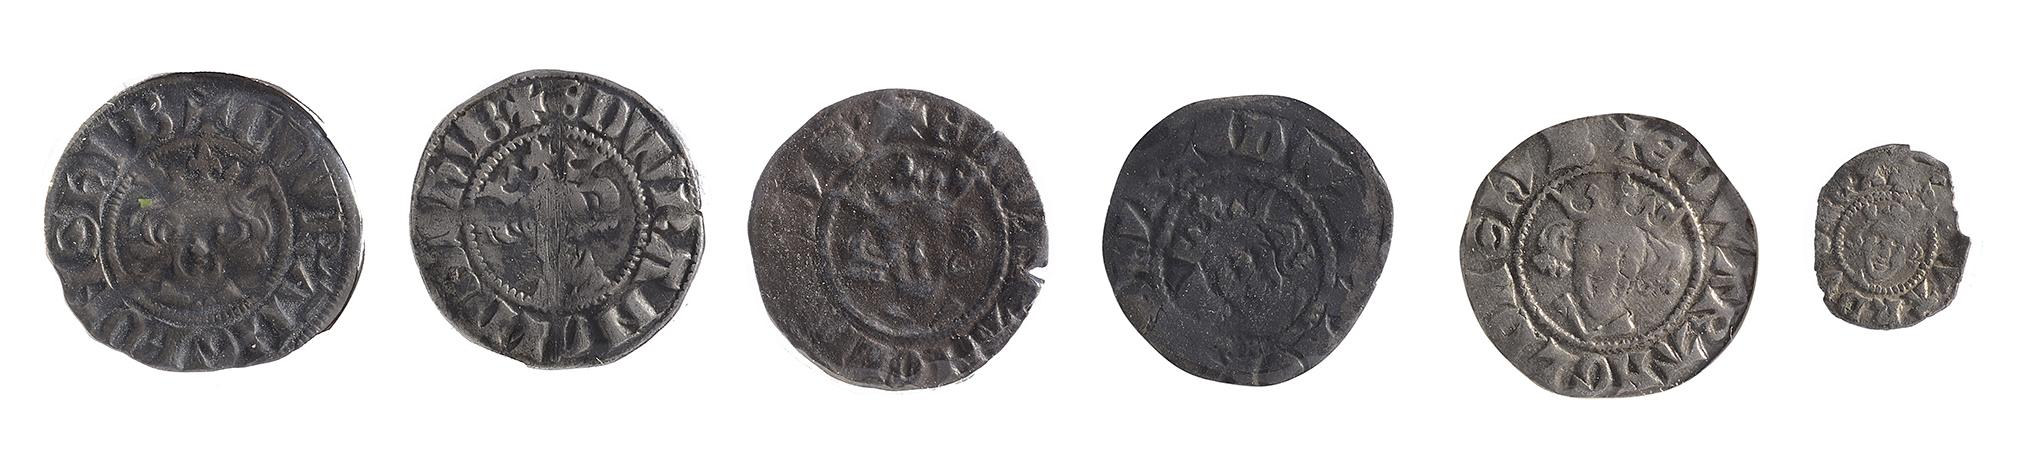 Plantaganet, Edward I (1272-1307) silver long cross penniesfirst Class 10cf Canterbury Long Cross